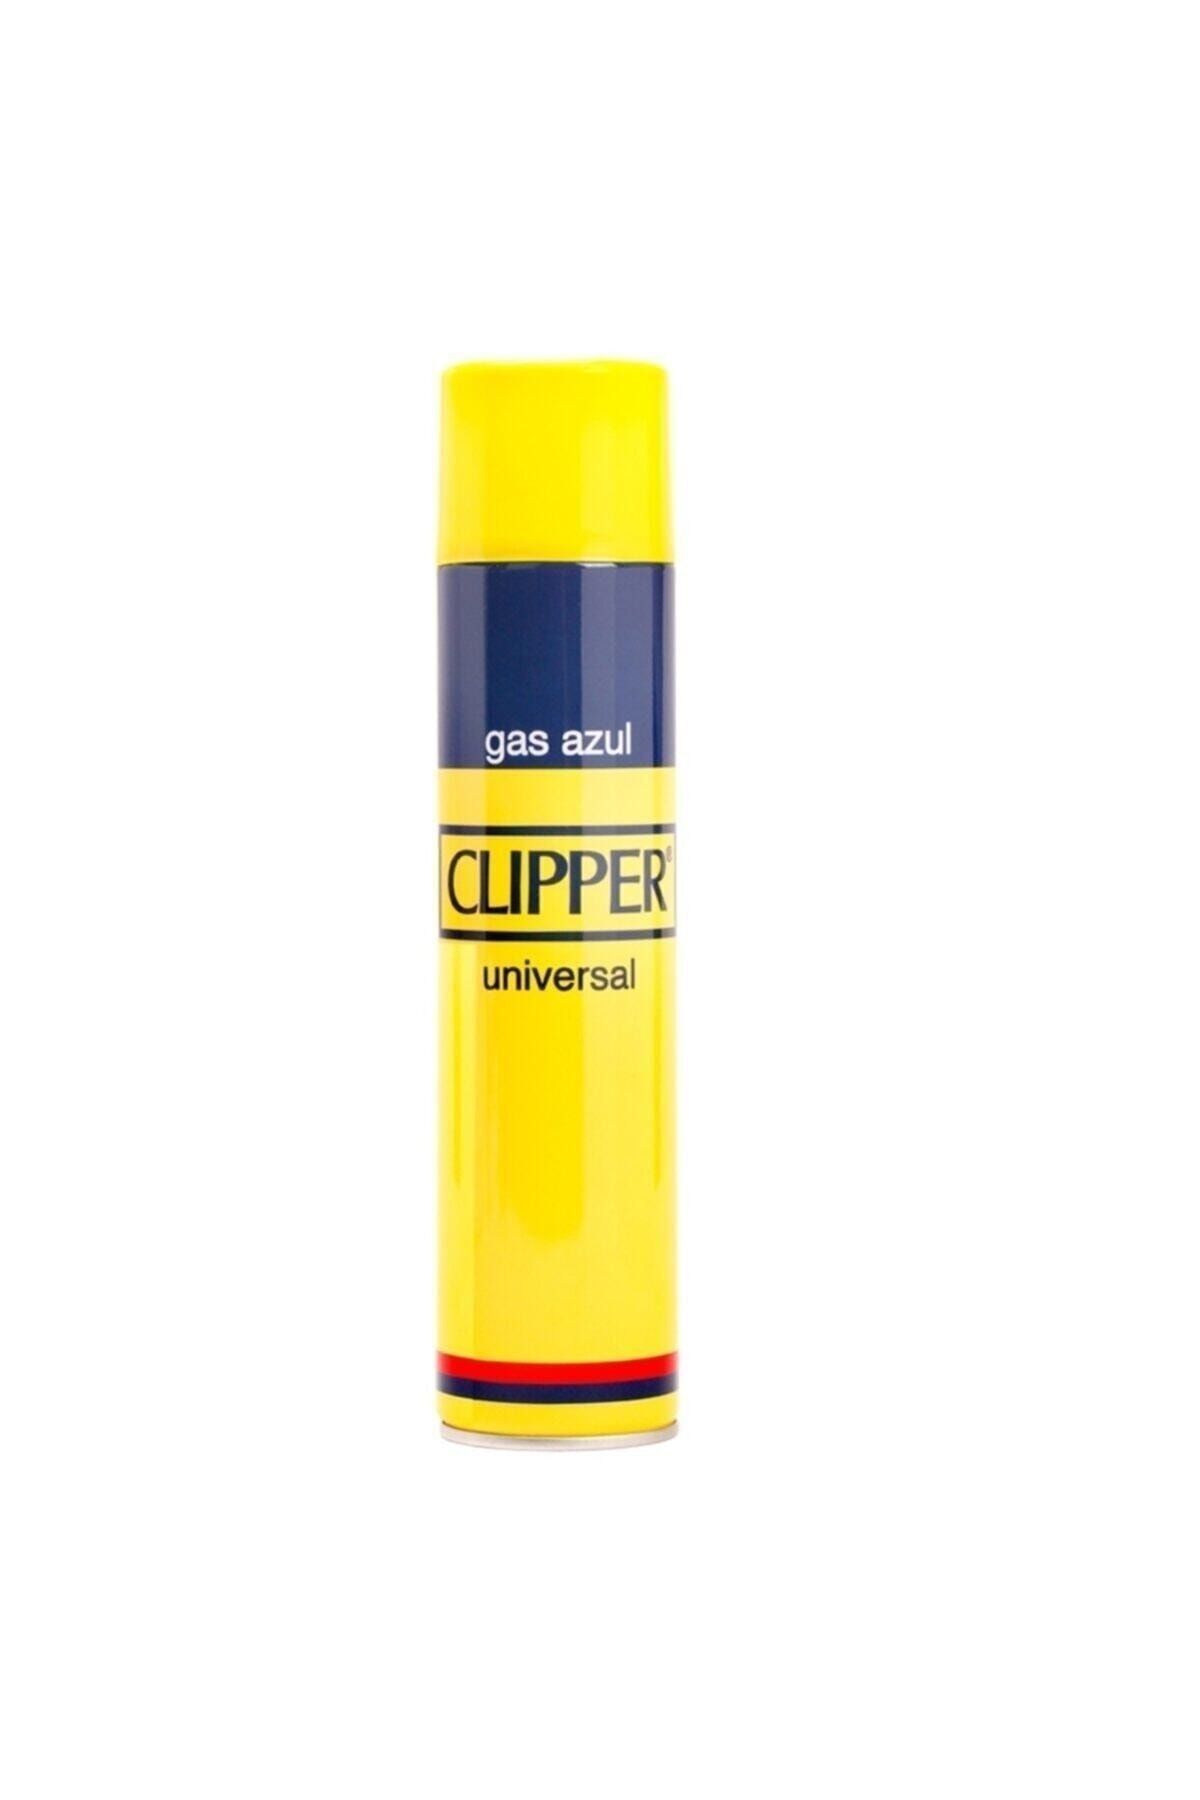 Clipper 250 ml. Universal Gas Azul Çakmak Gazı Hu75azul